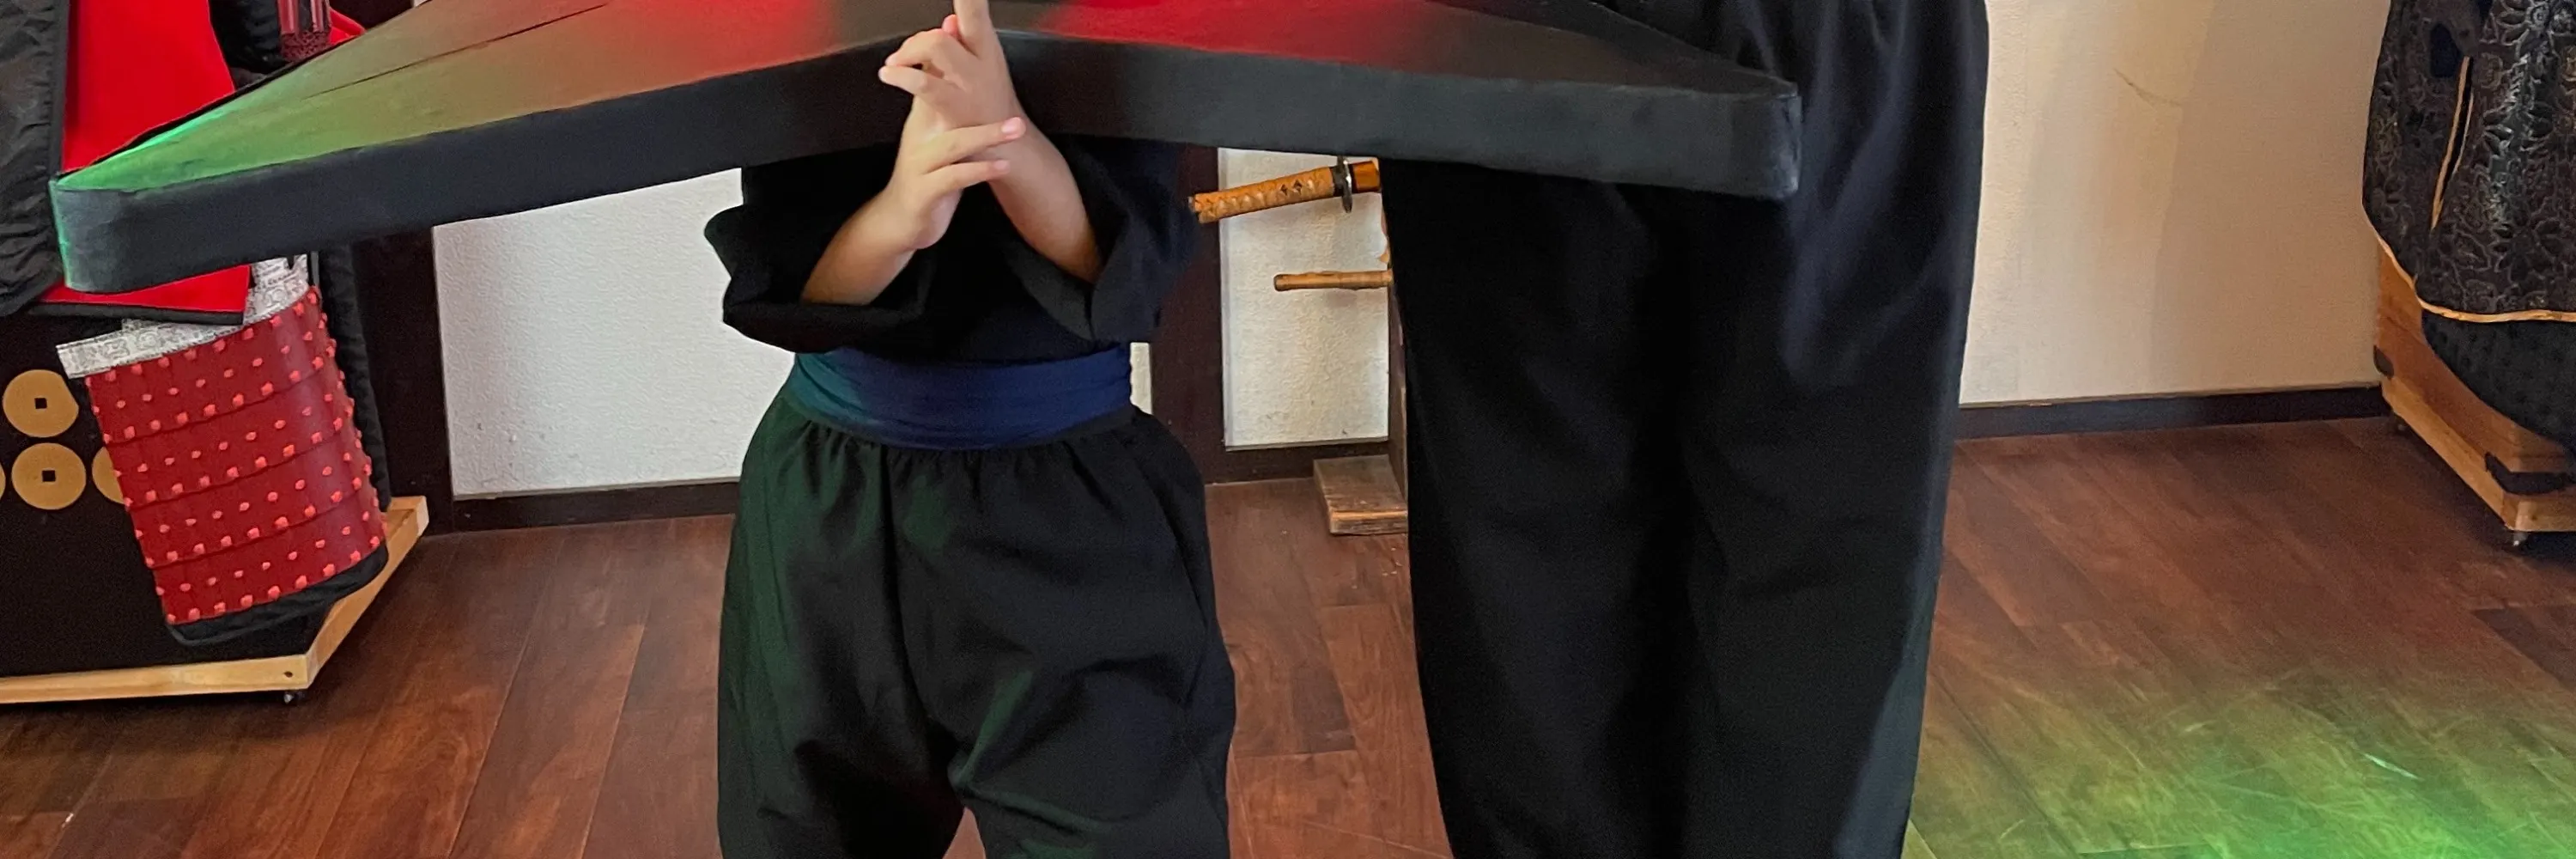 Ninja Workshop and Costume Rental Experience in Osaka - Explore the Secrets of the Ninja Tradition in Osaka